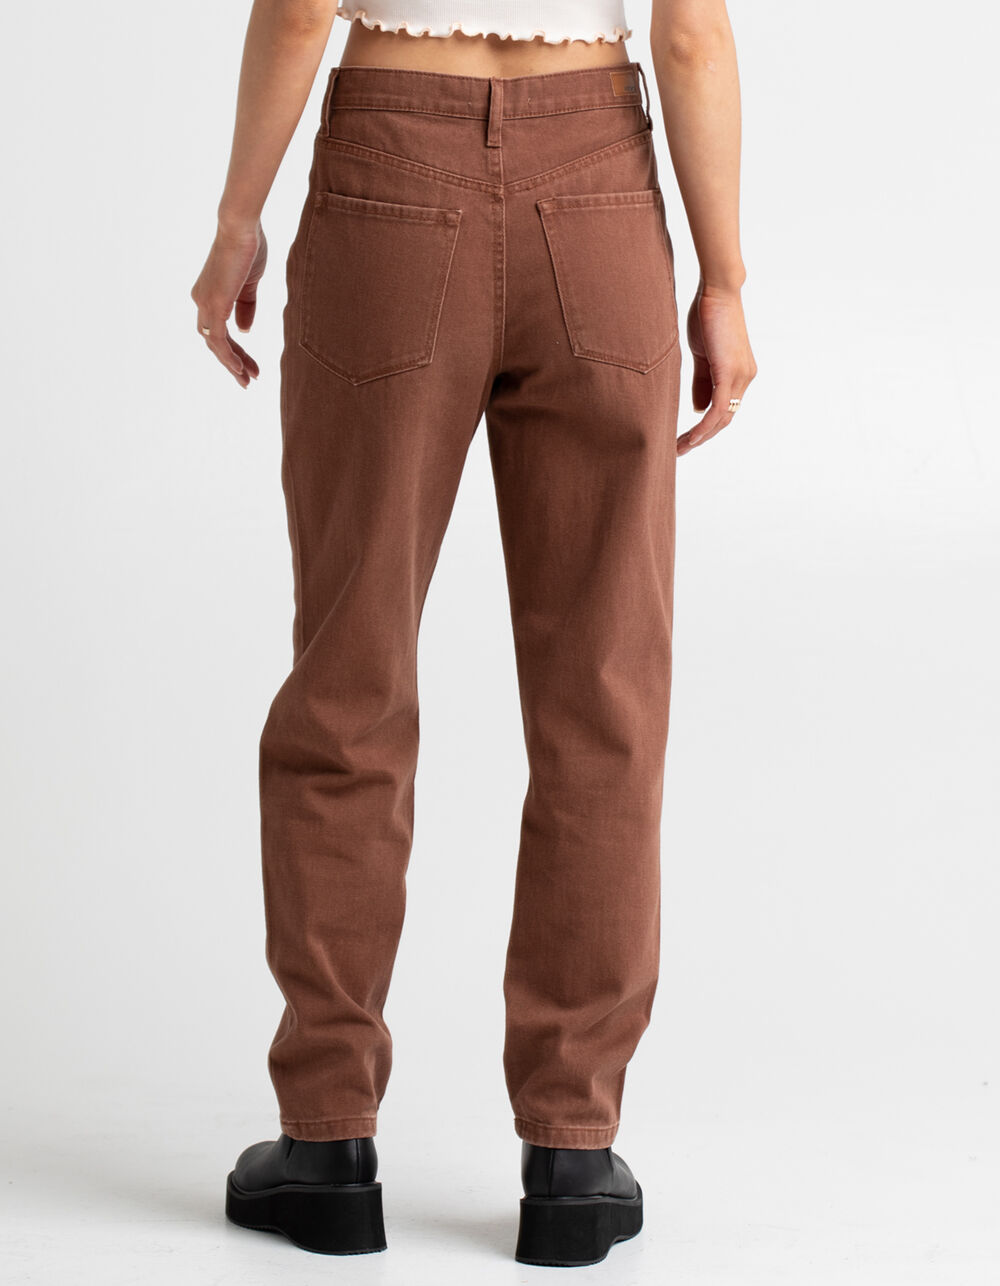 NEW RSQ Jeans Tan Brown Manhattan High Rise Size 7/28 - beyond exchange